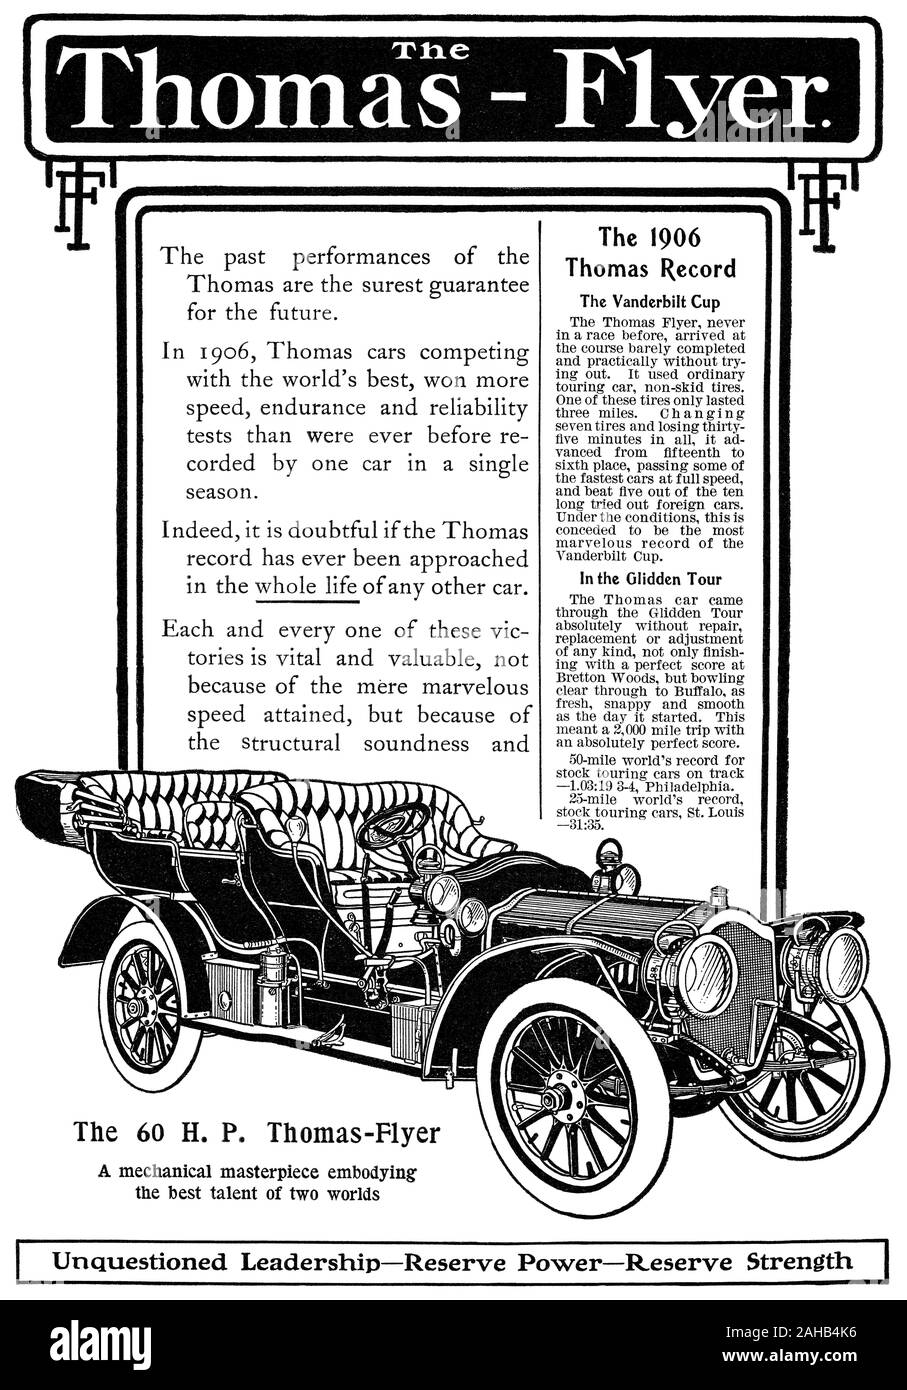 1907 U.S. advertisement for the Thomas Flyer automobile. Stock Photo